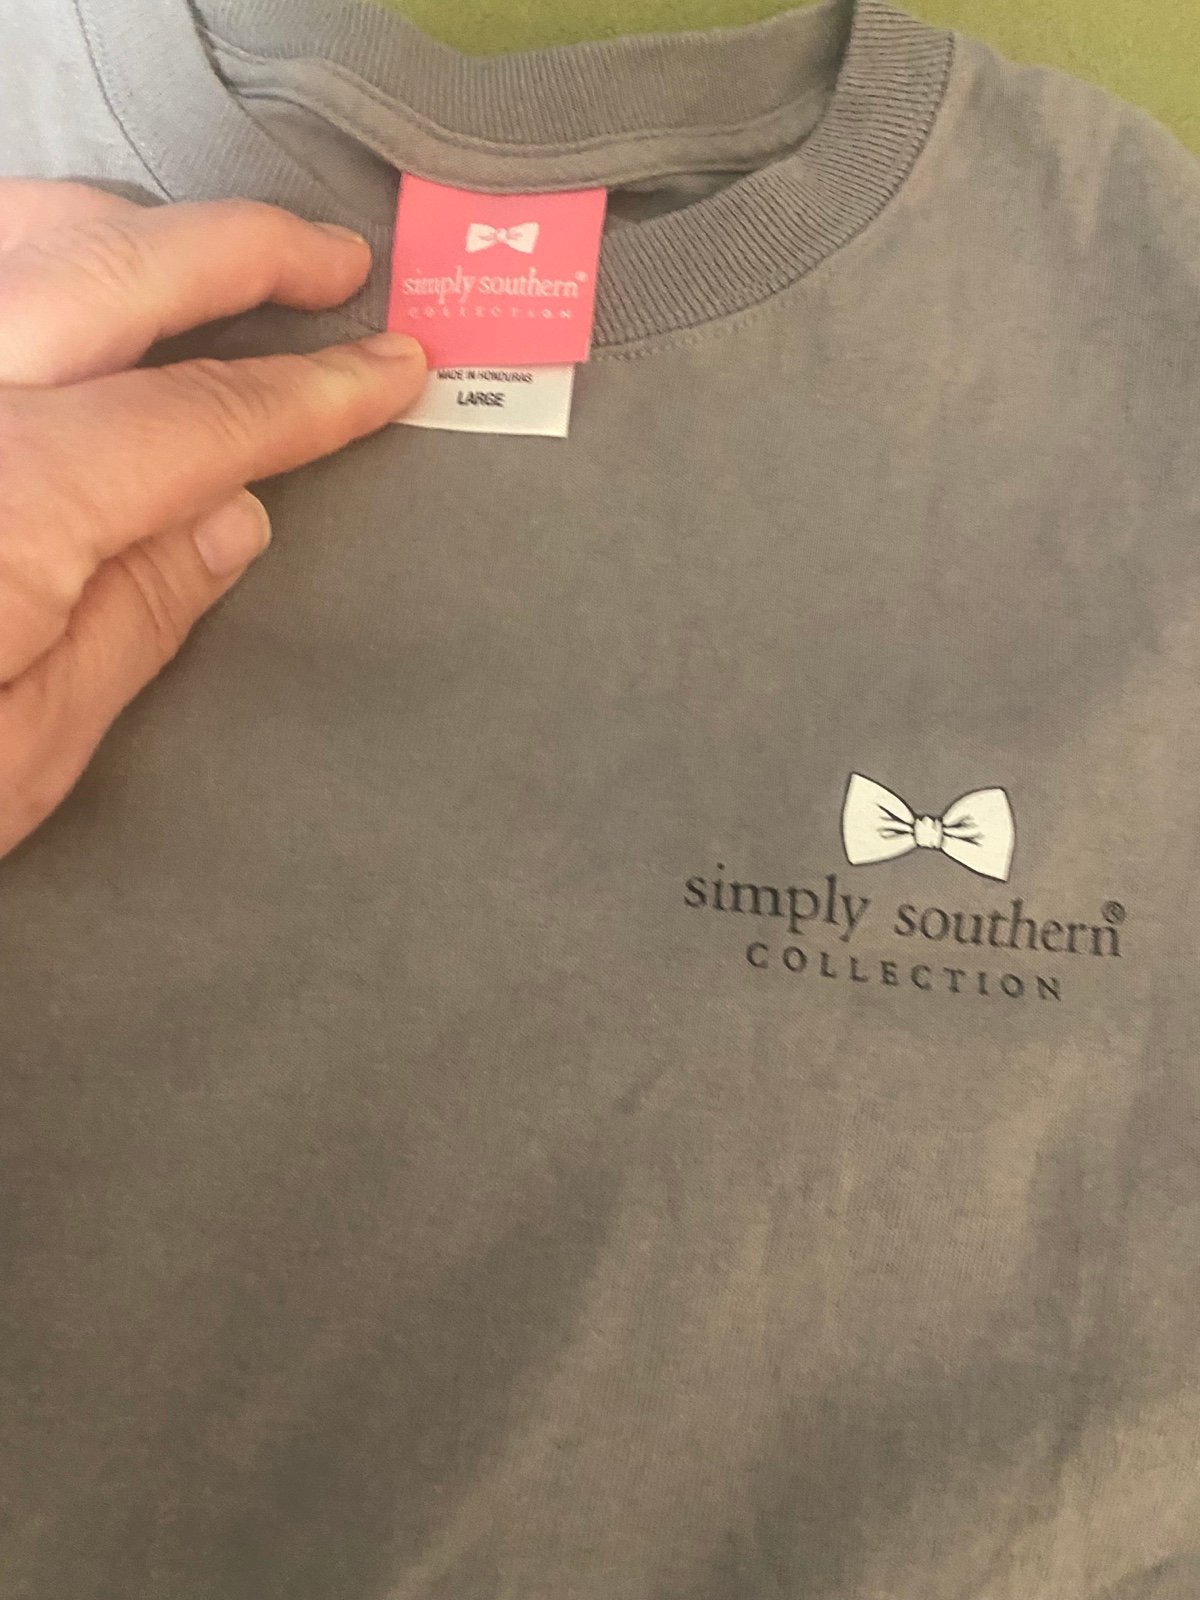 Wholesale price Simply Southern Long Sleeve Shirt N6pJpl5lR on sale